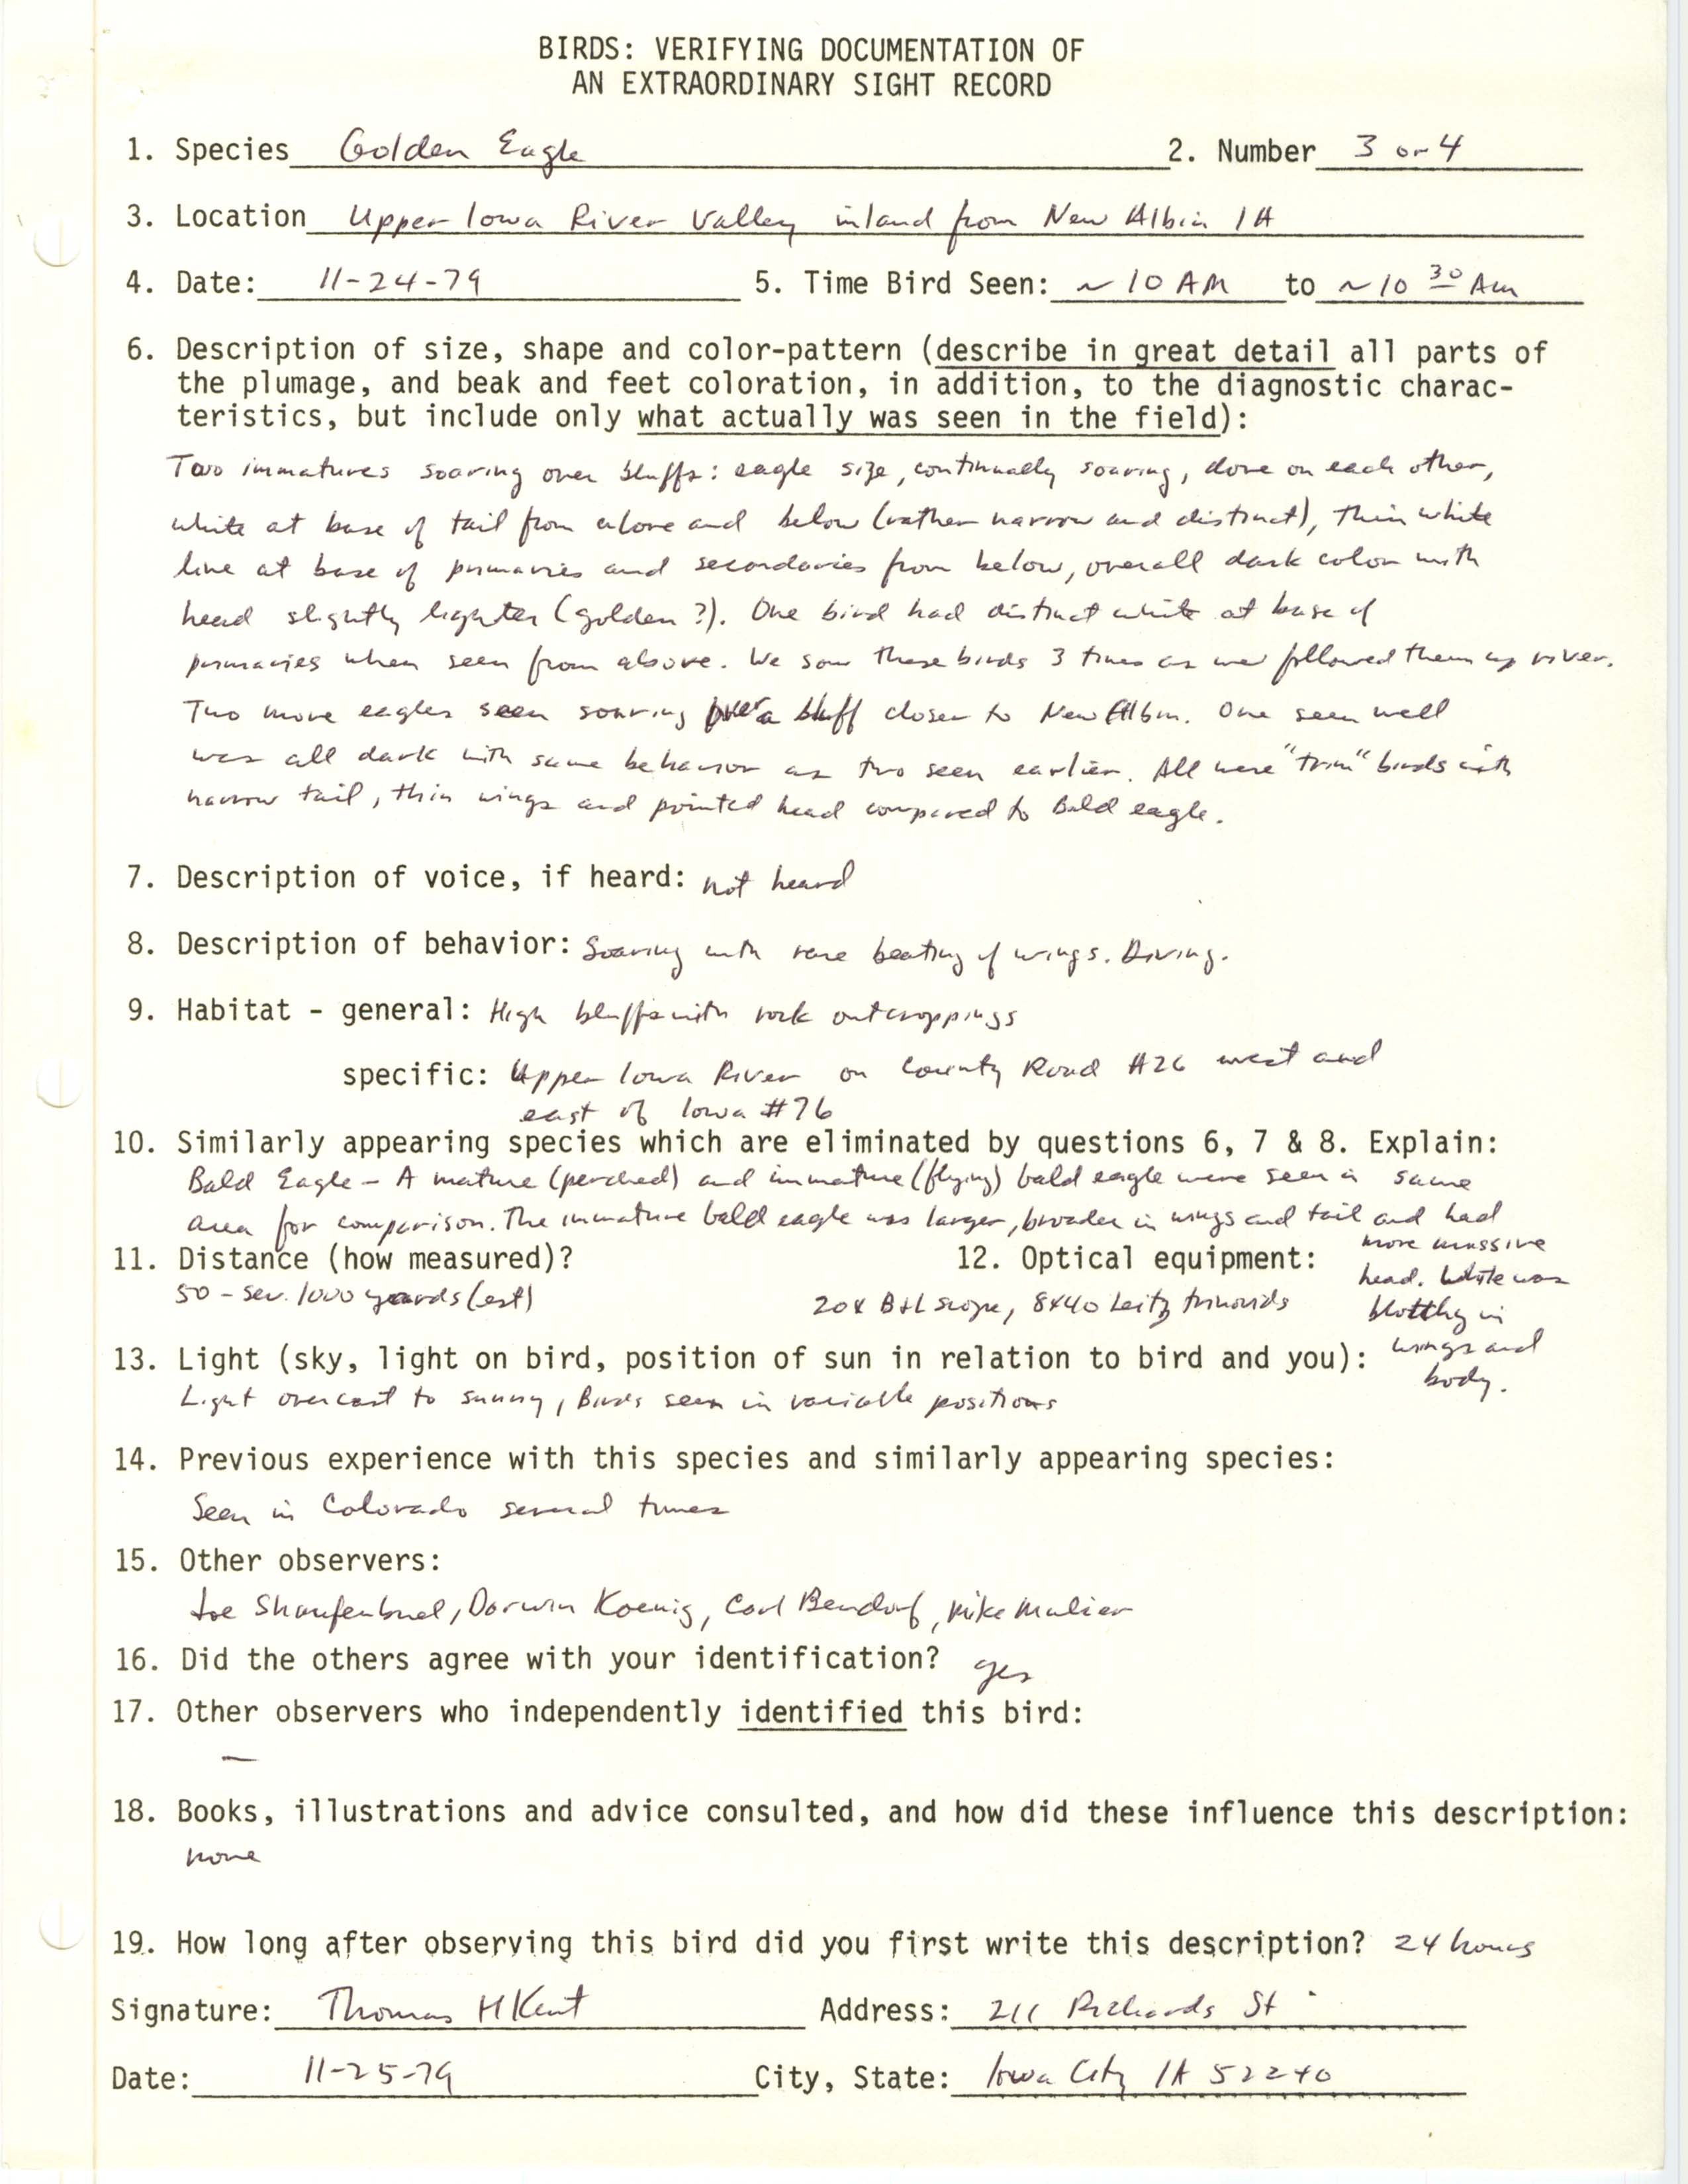 Rare bird documentation form for Golden Eagle at New Albin, 1979